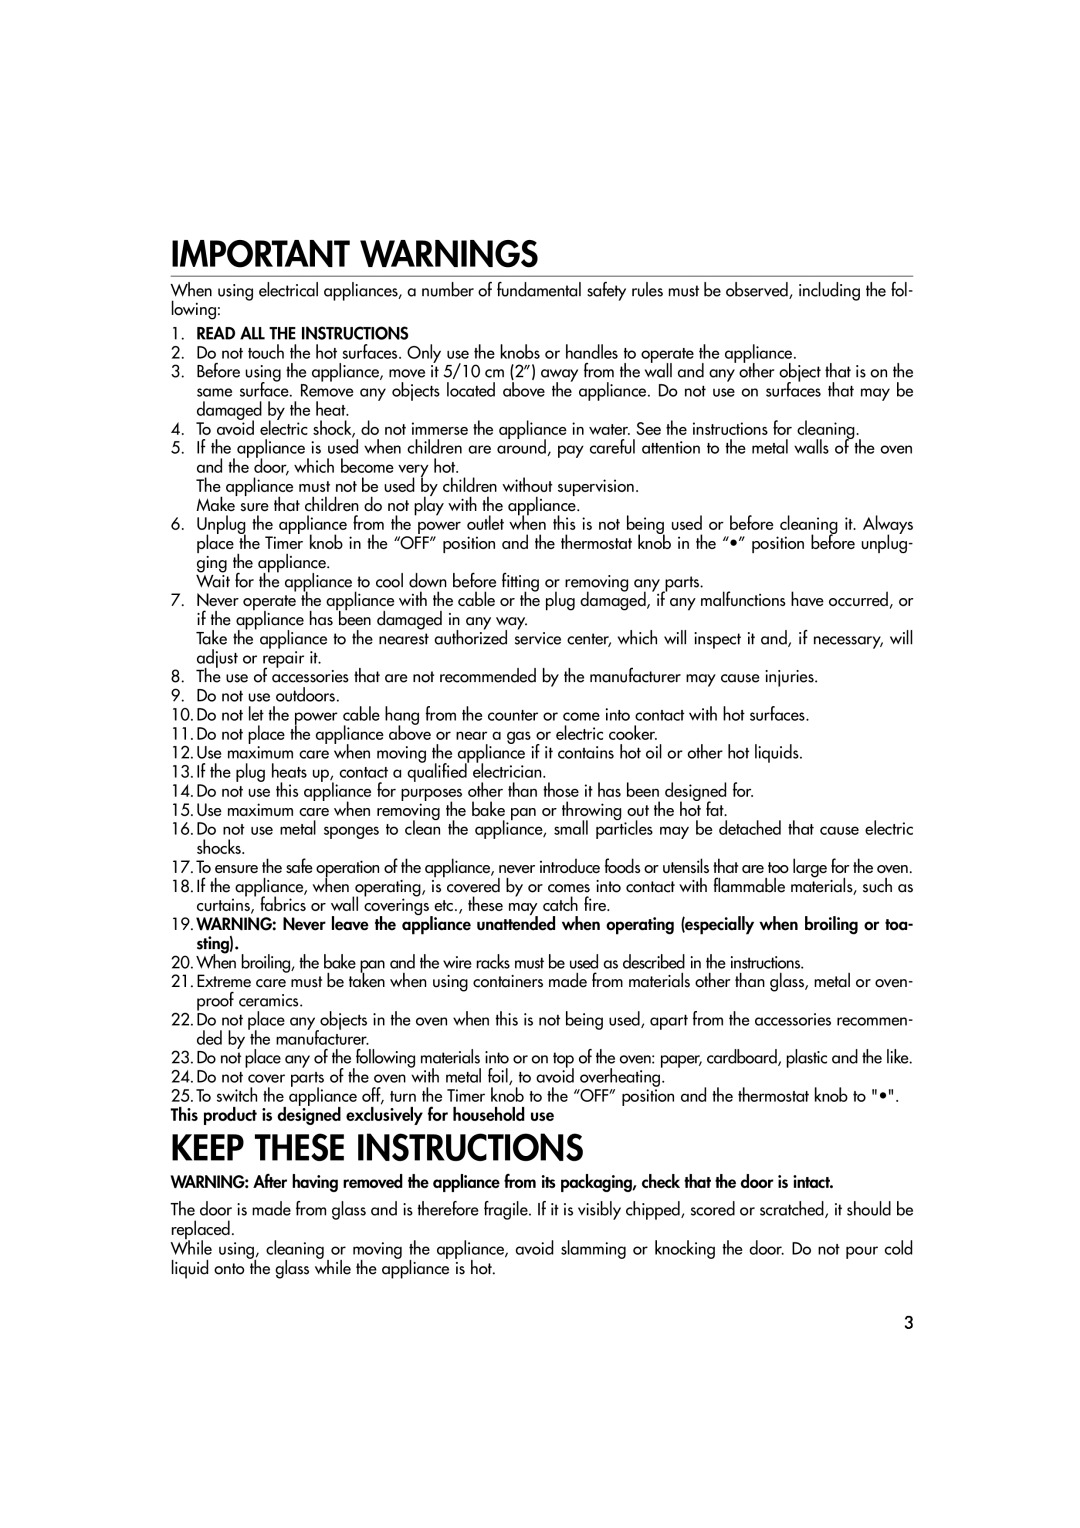 DeLonghi EO1270 B manual Important Warnings, Keep These Instructions 